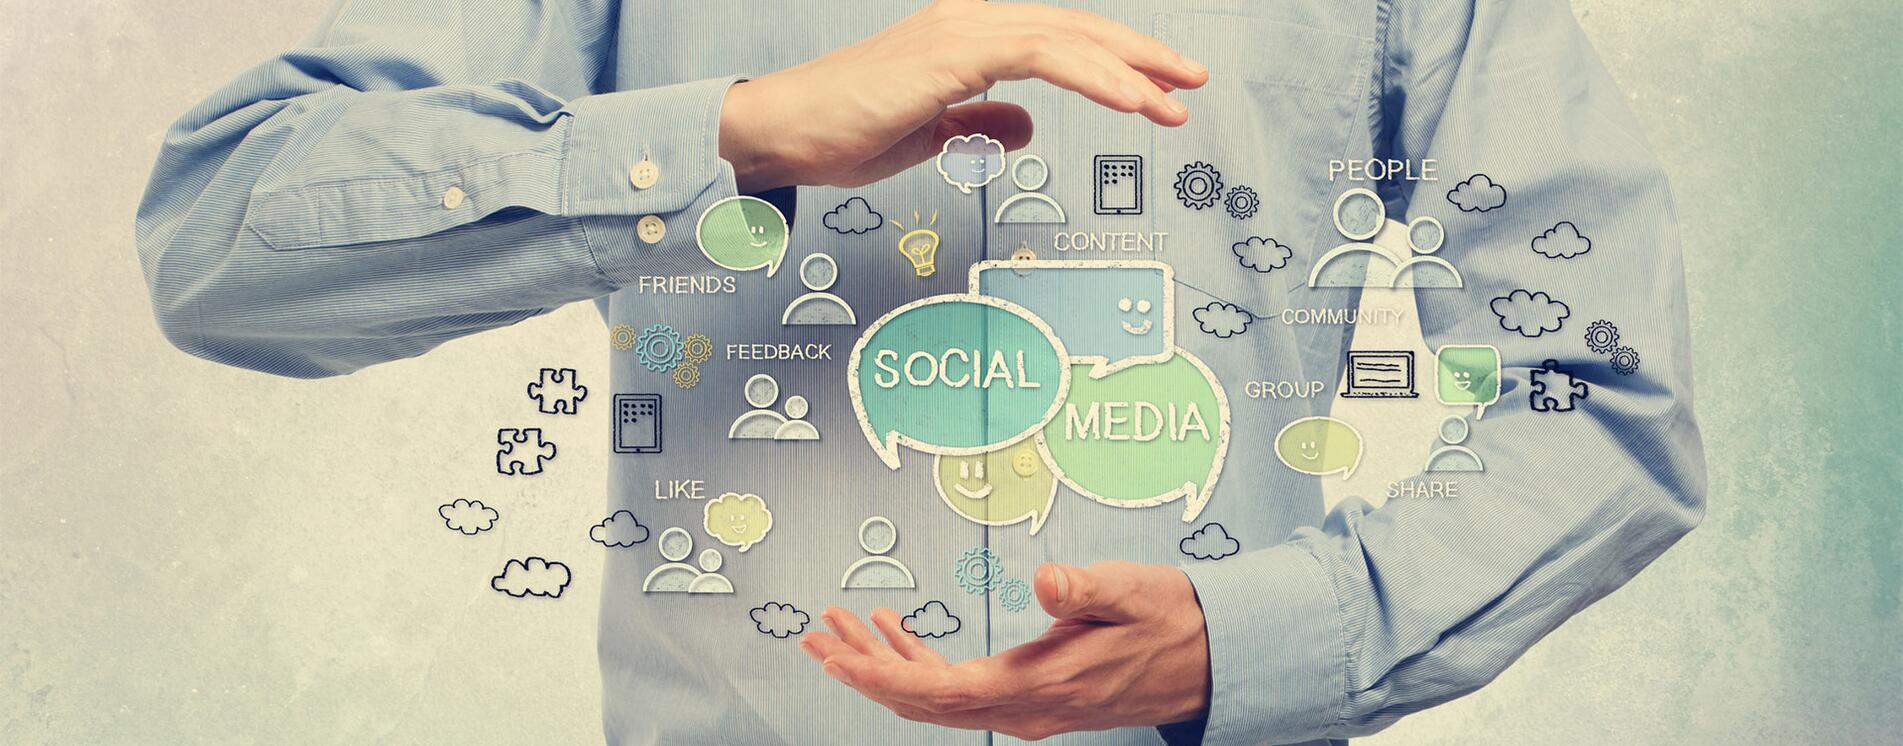 Lithium / Spredfast Merger Creates a True Enterprise Social Media ...